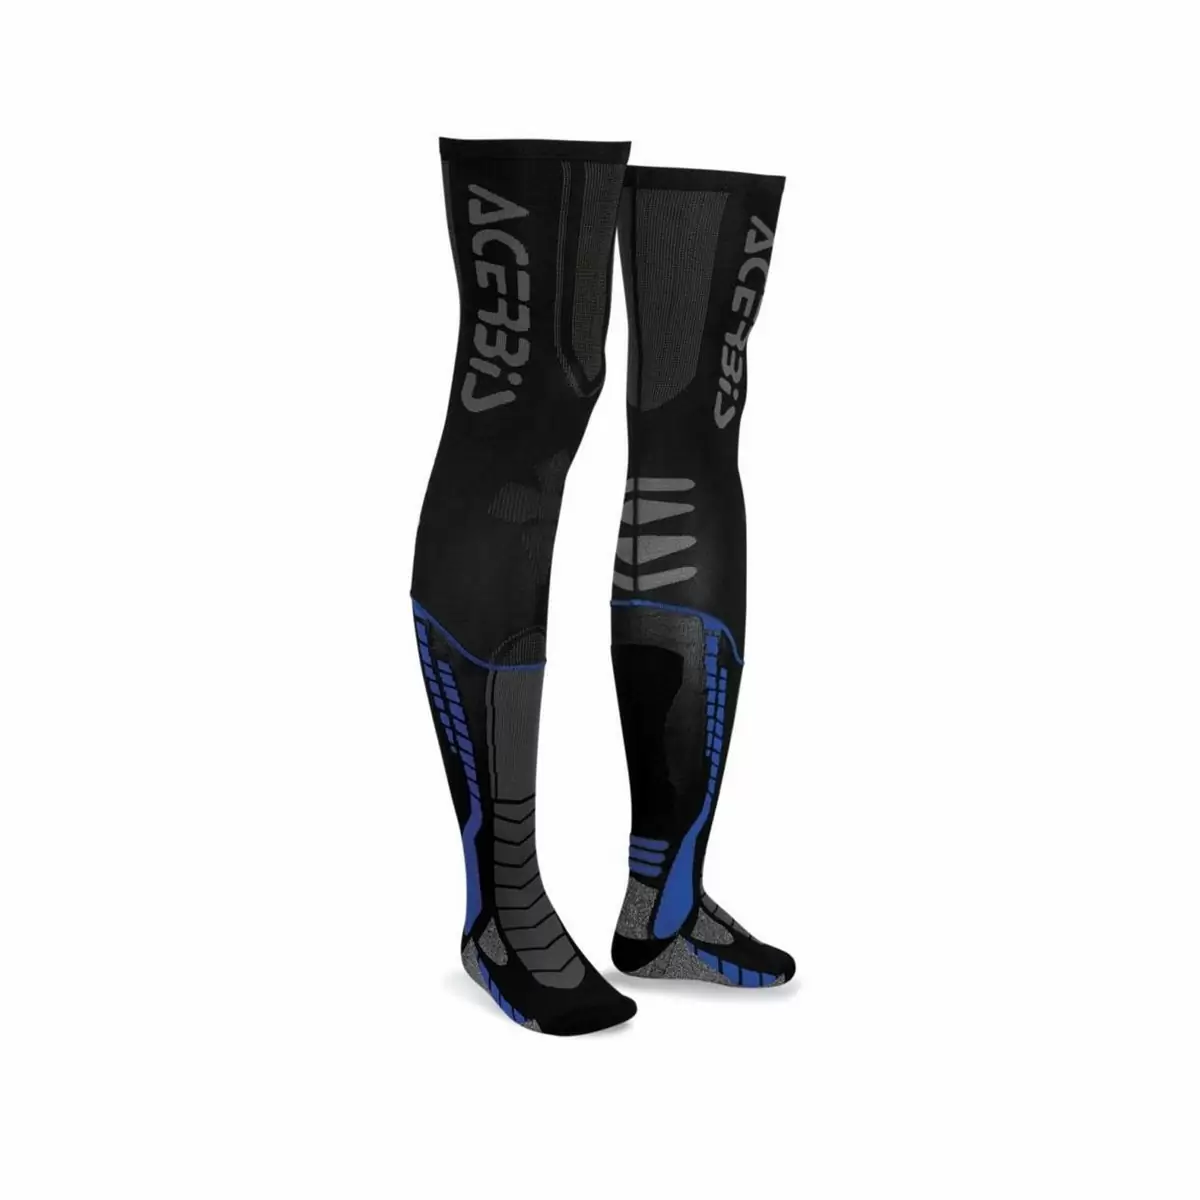 Motocross long socks X-LEG pro blue size L / XL - image